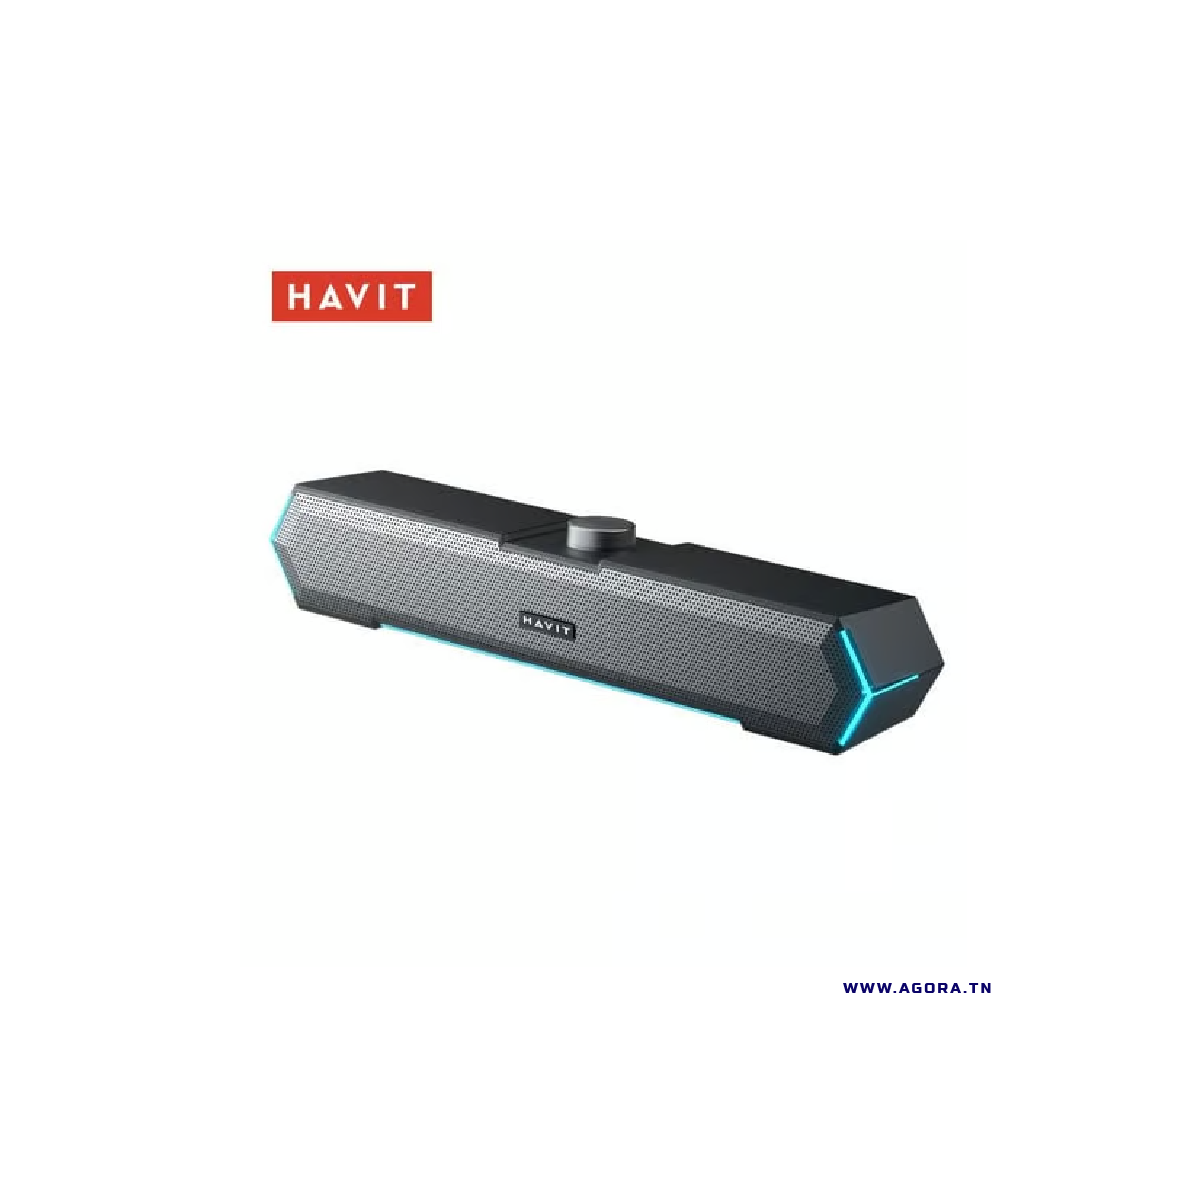 HAUT PARLEUR USB HAVIT RGB - SK706 - Noir 